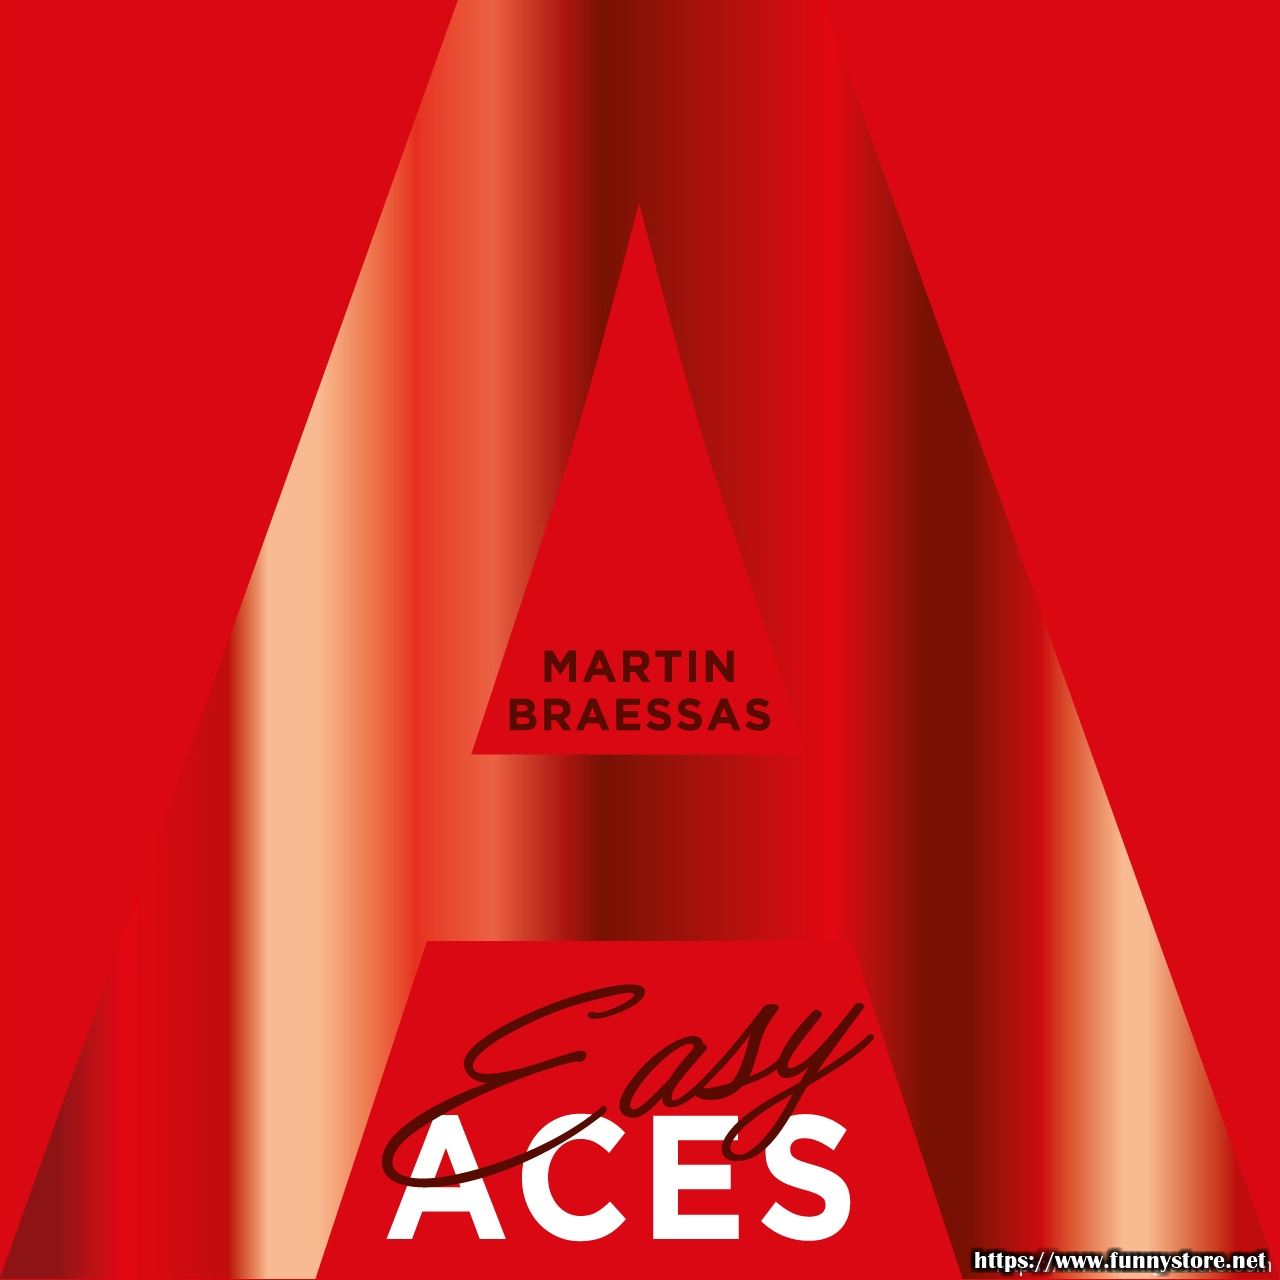 Martin Braessas - Easy Aces